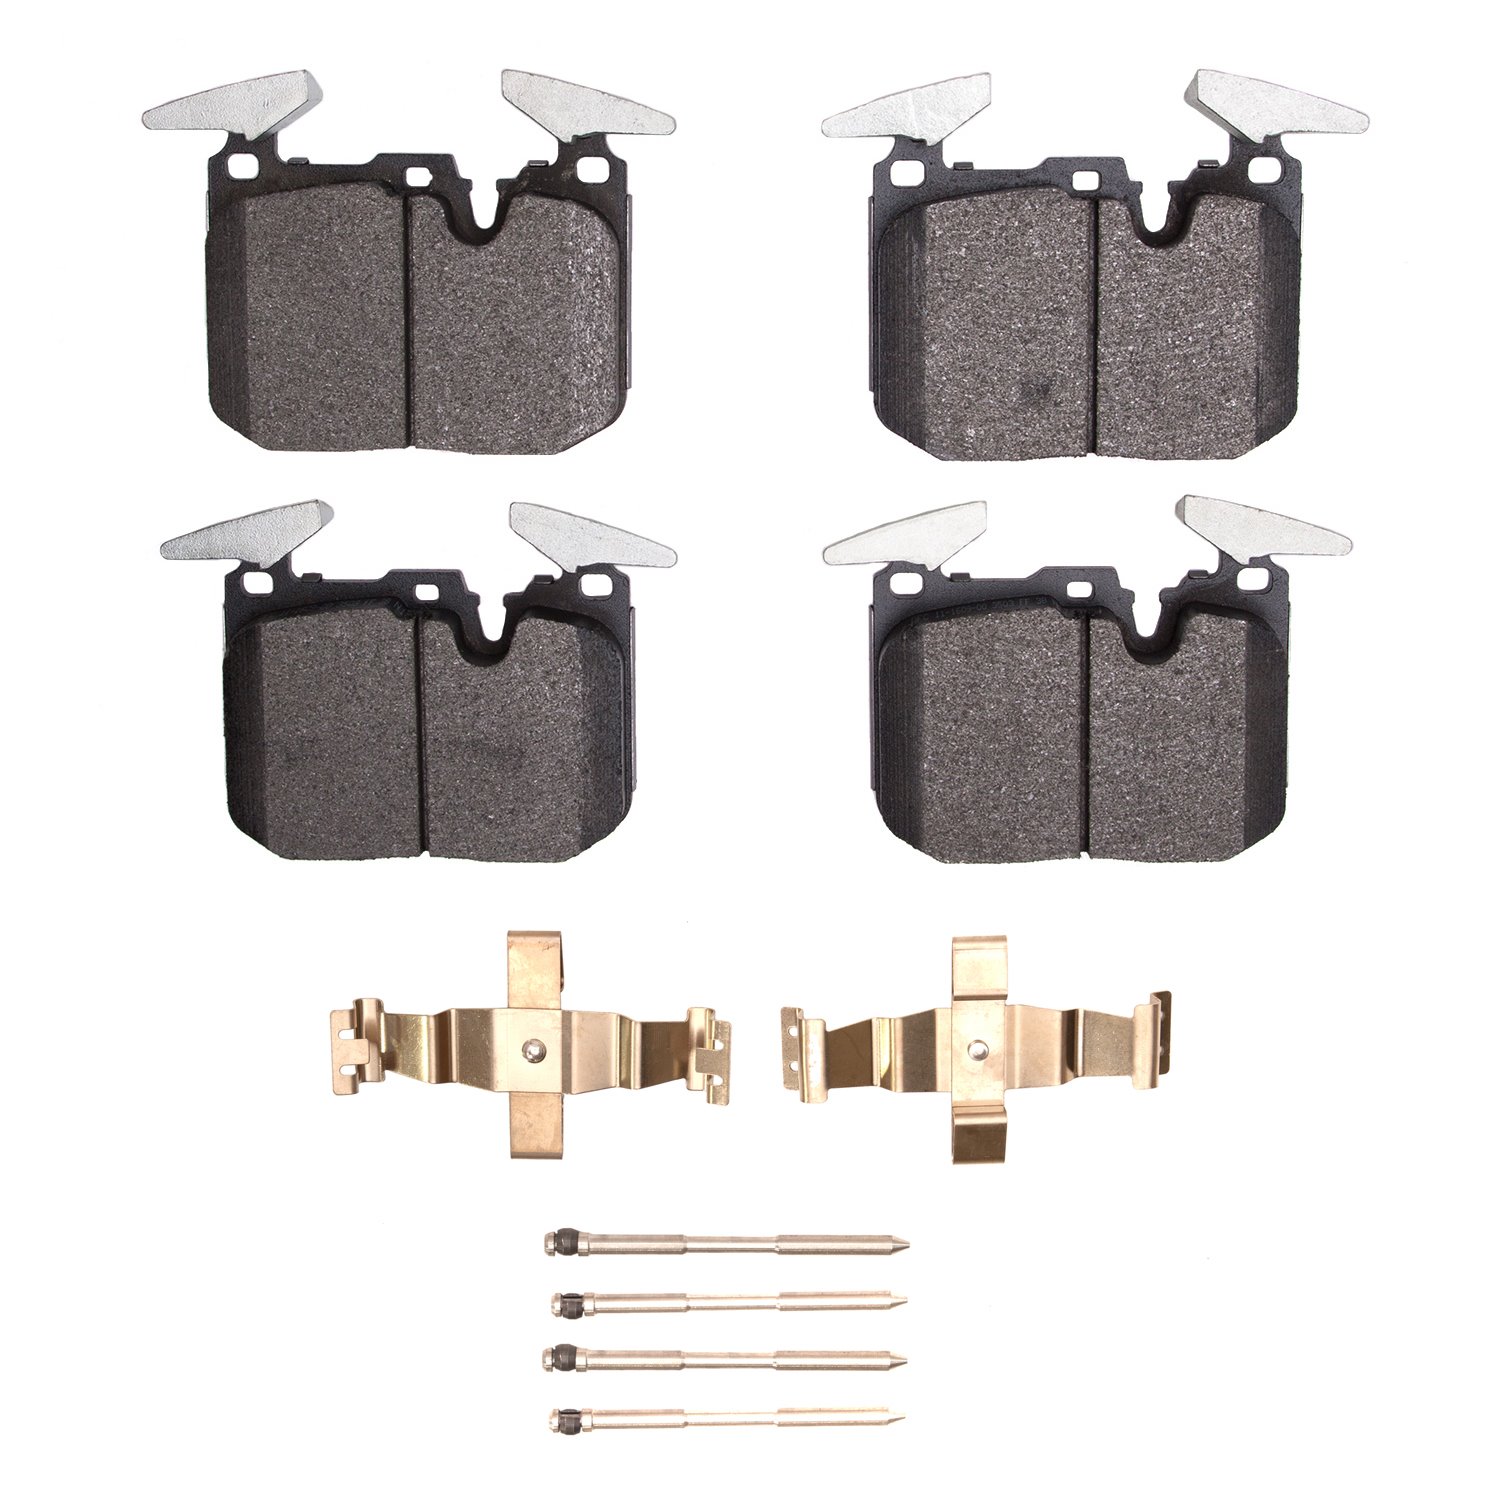 Optimum OE Brake Pads & Hardware Kit, Fits Select Fits Multiple Makes/Models, Position: Front